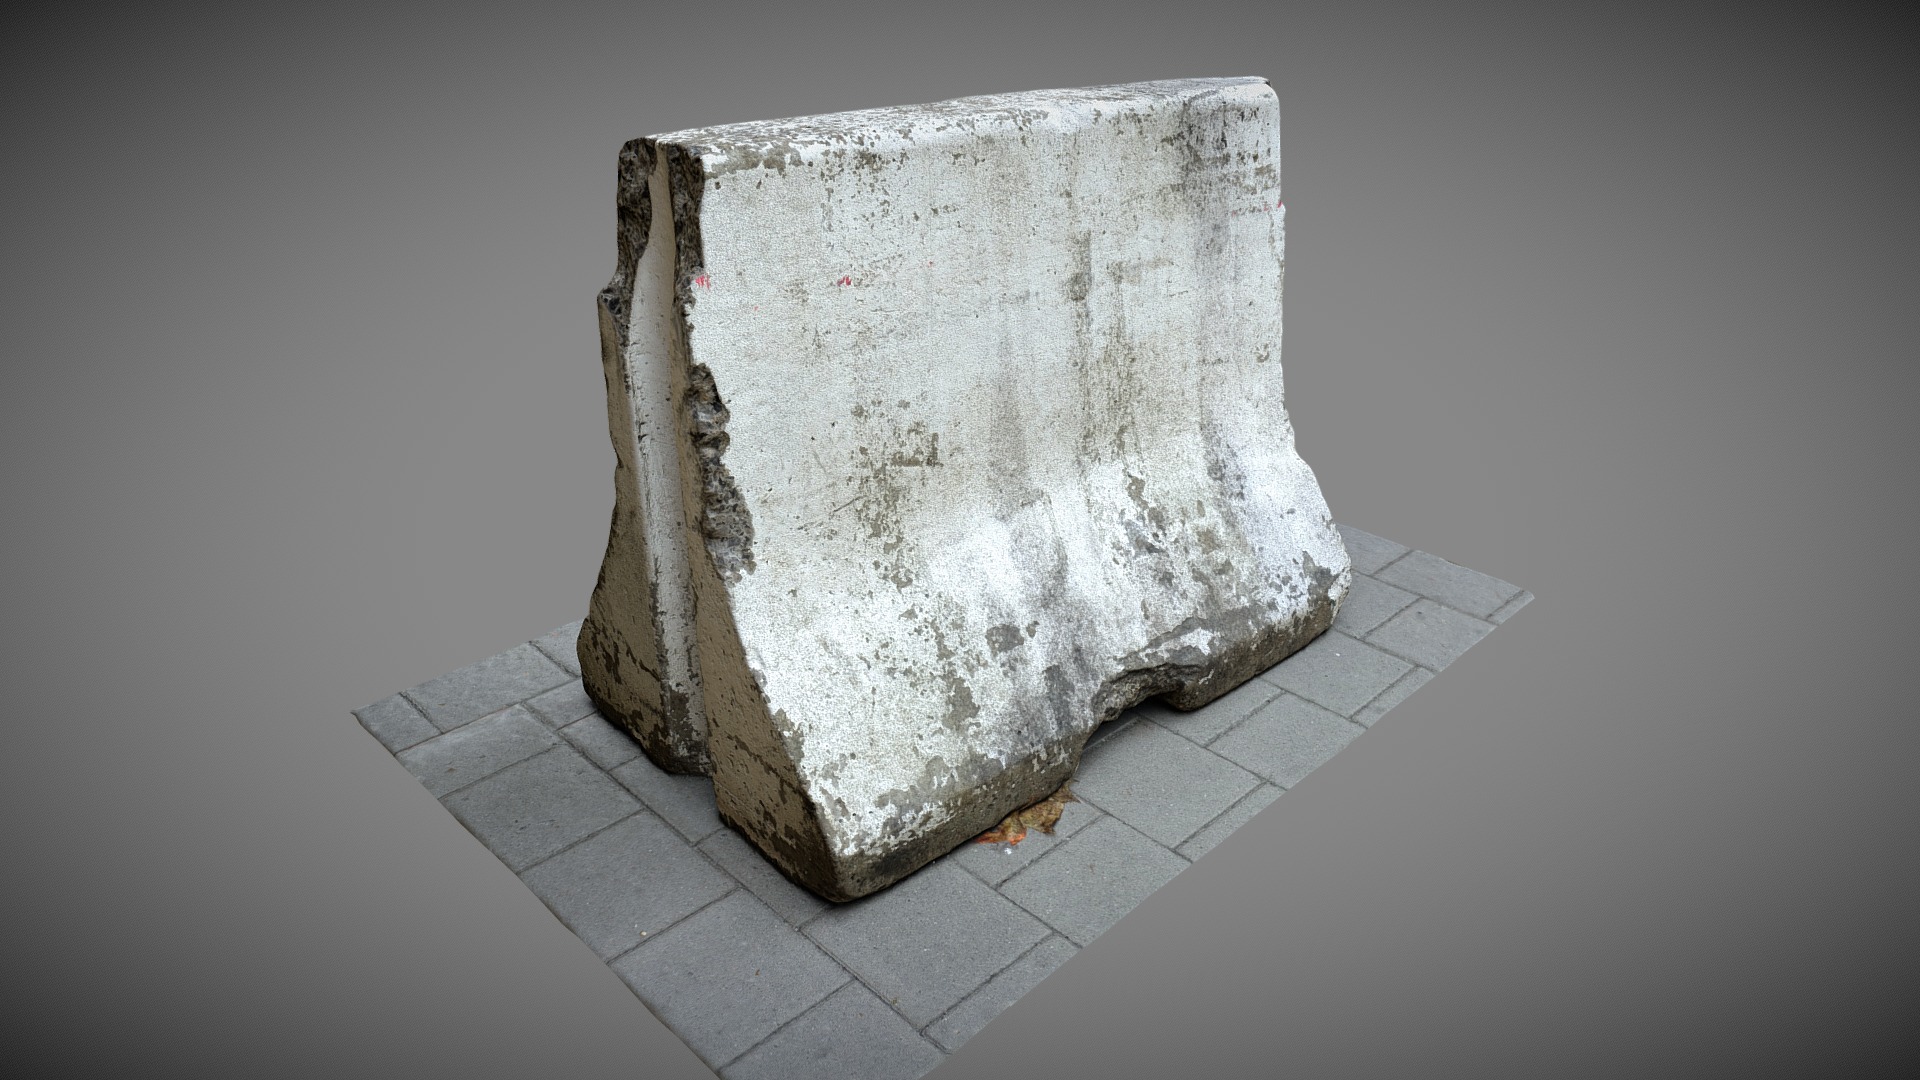 3D model Concrete block - This is a 3D model of the Concrete block. The 3D model is about a stone block on a tile floor.